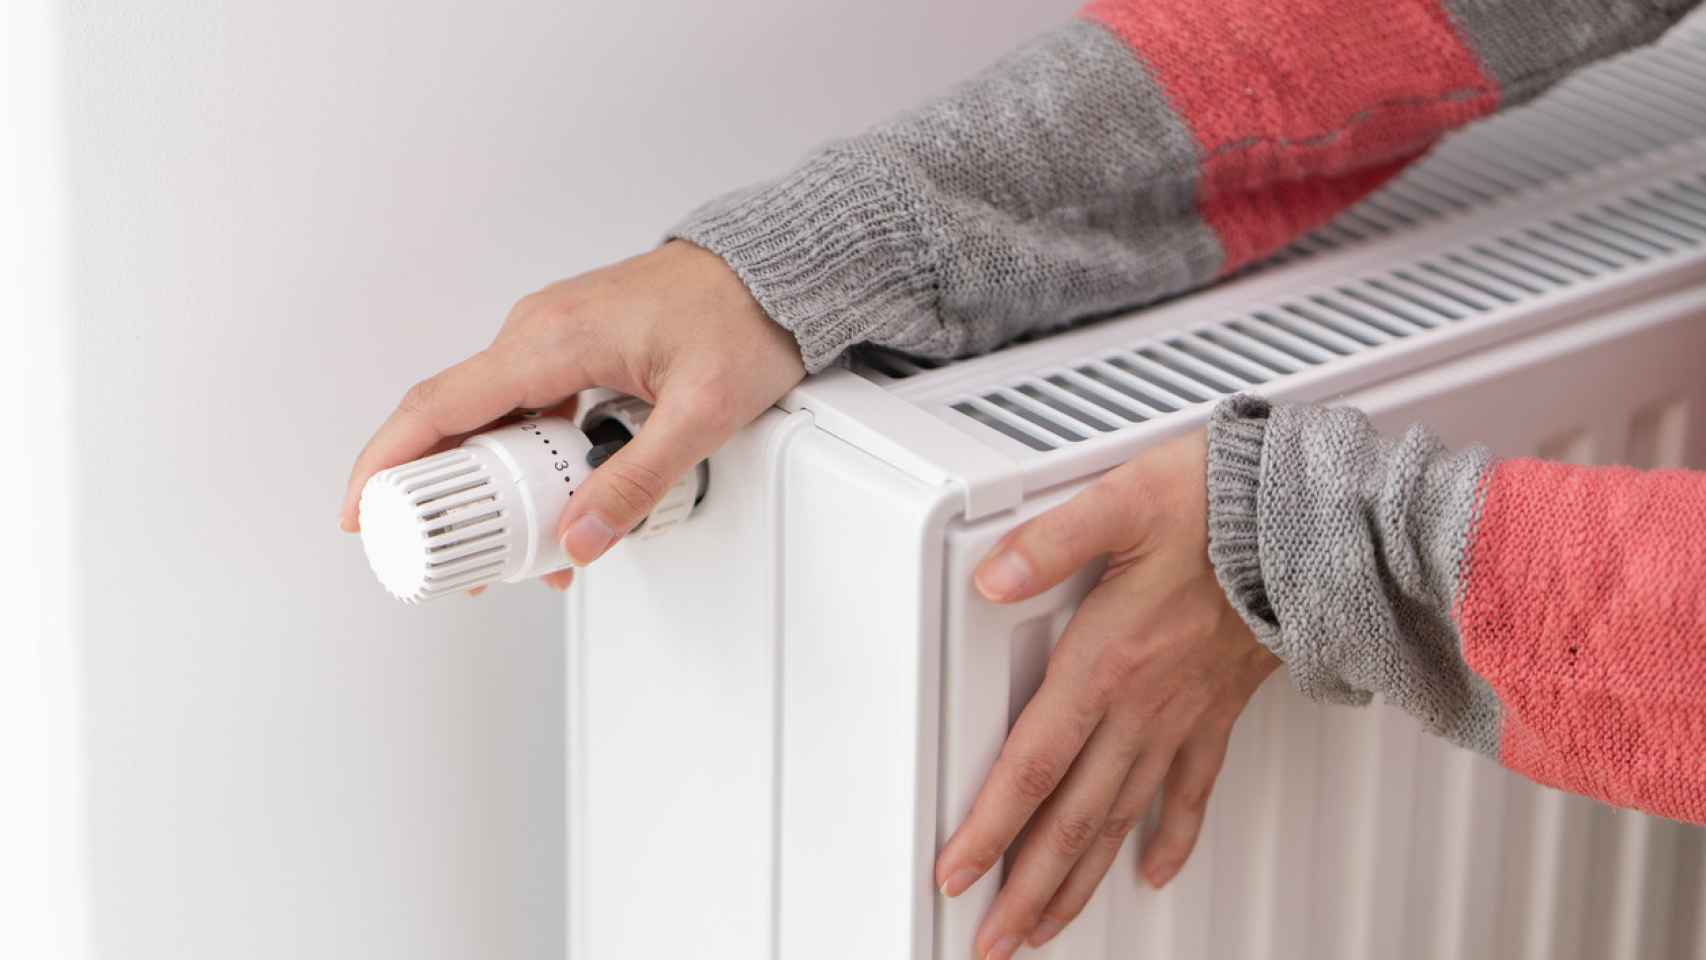 El facilísimo truco casero para que tus radiadores calienten más sin gastar energía